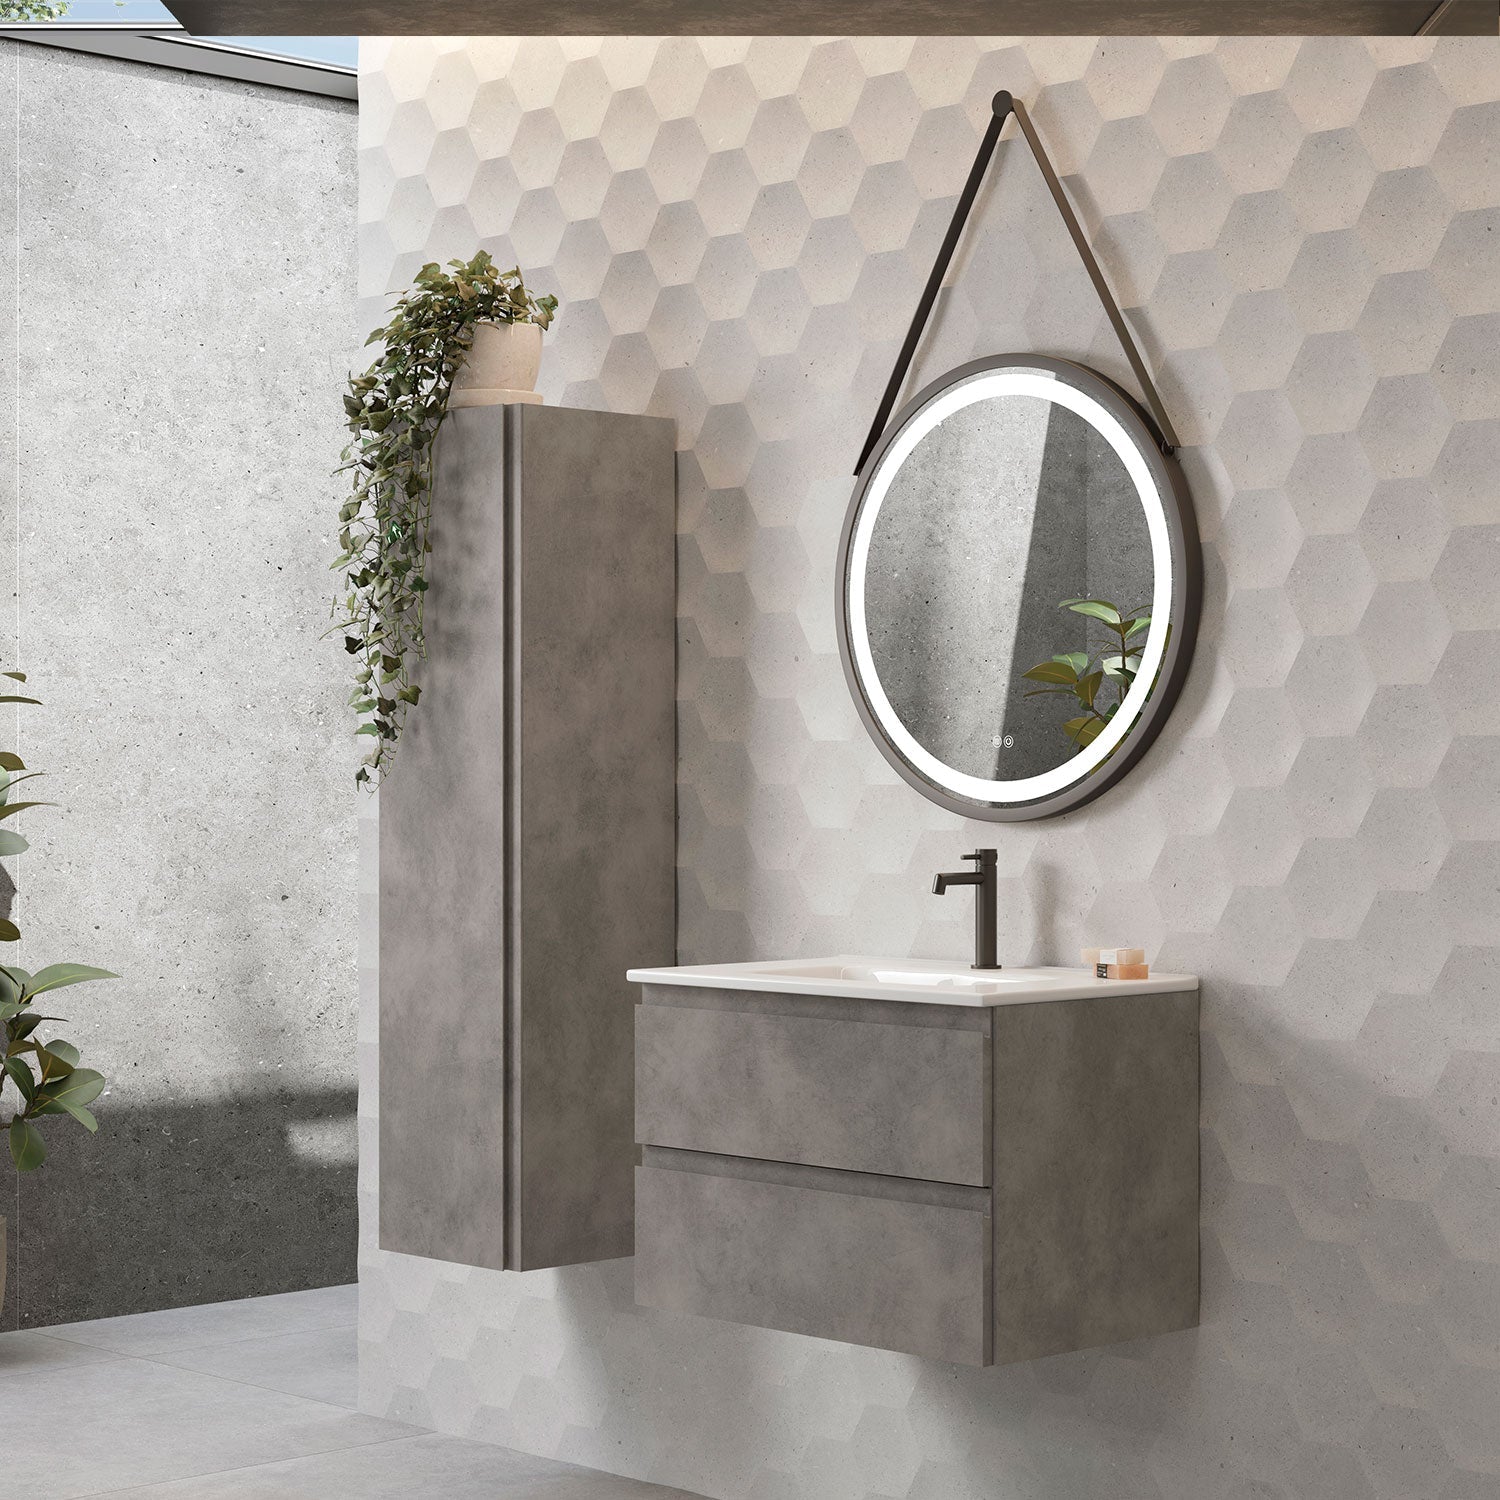 DAX Pasadena Single Vanity Cabinet with Onix Ceramic Basin Included